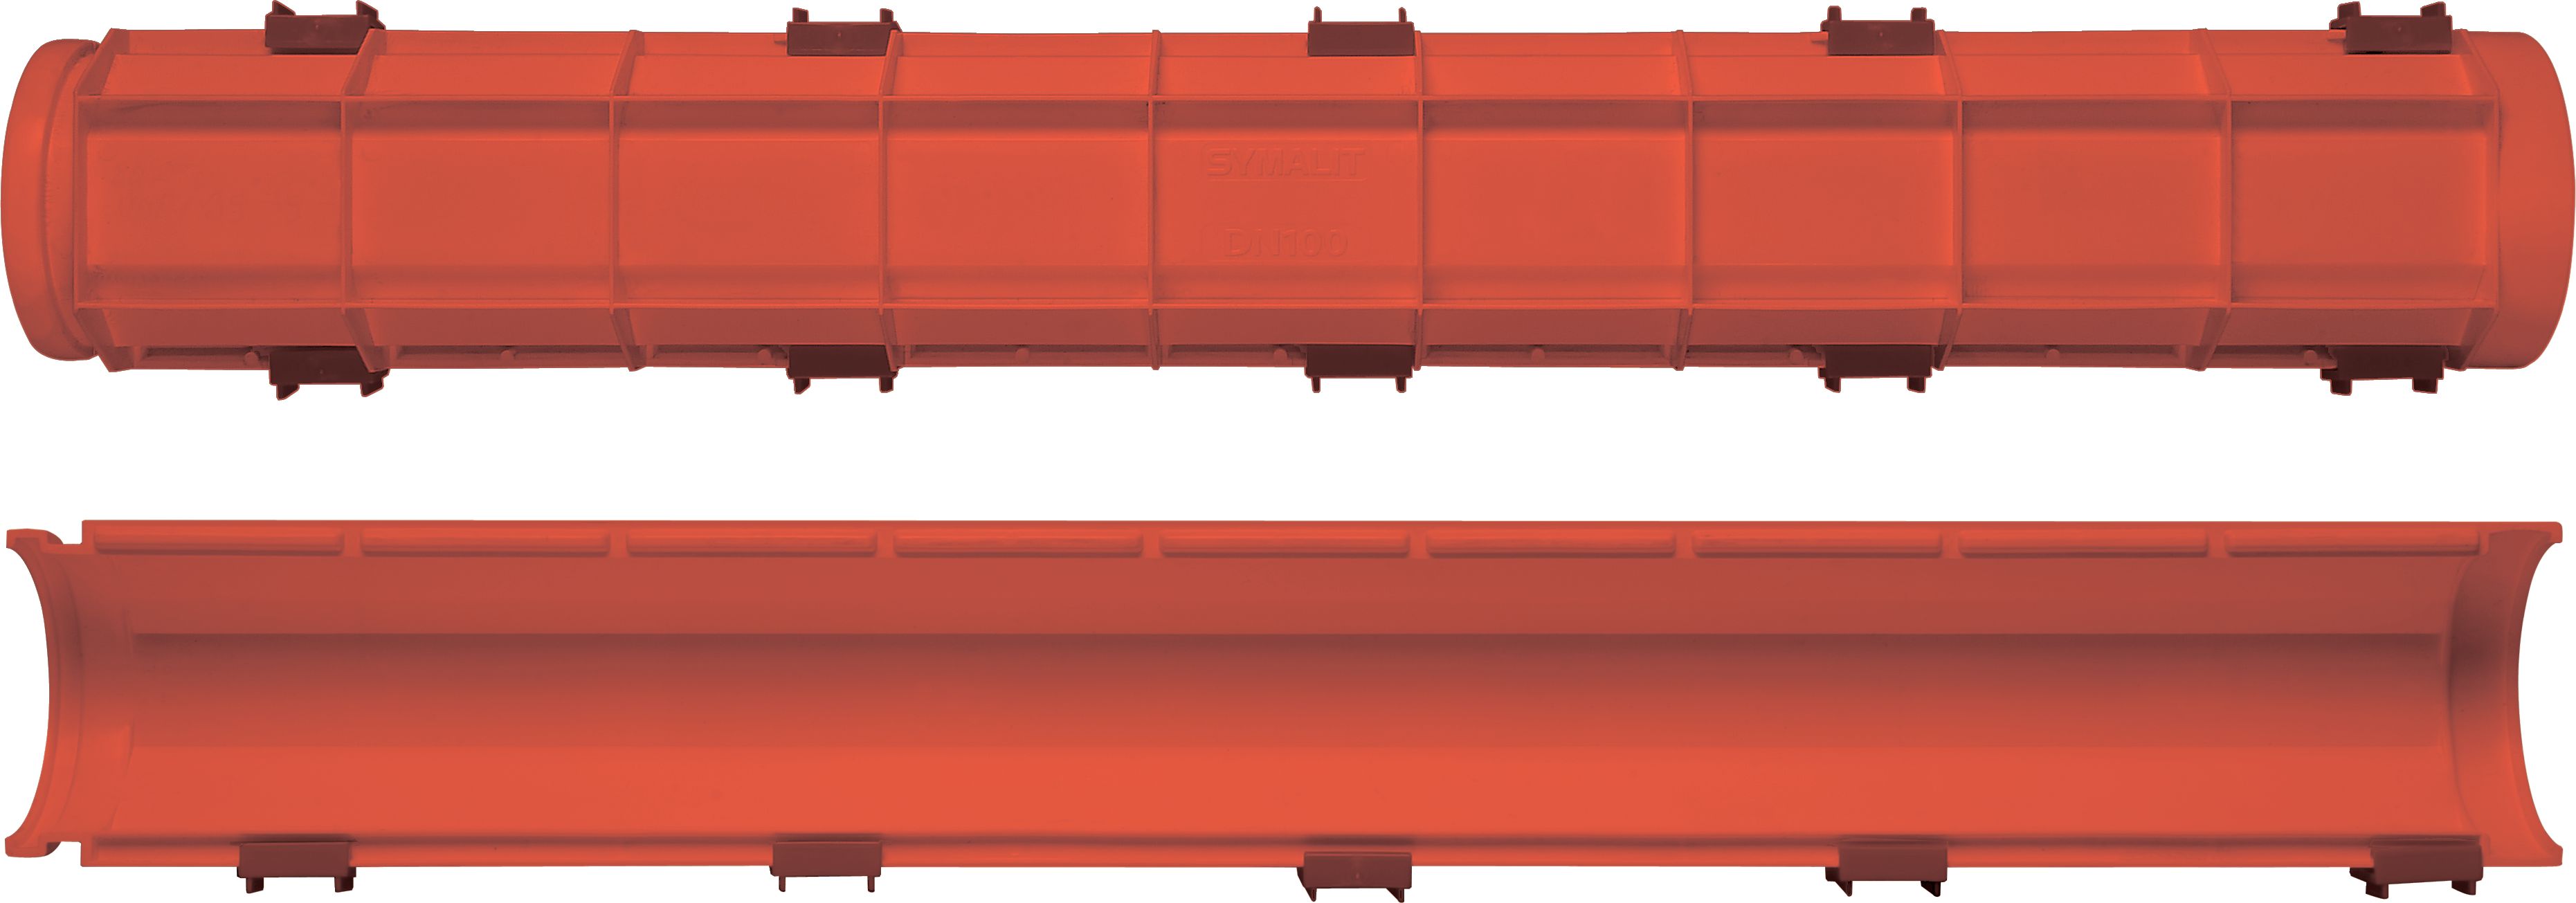 SYSPRO-Kabelhalbschalen HDPE rot NW: 80mm L:1m ohne Verschlussklemmen - Kabelschutz Formstücke netto